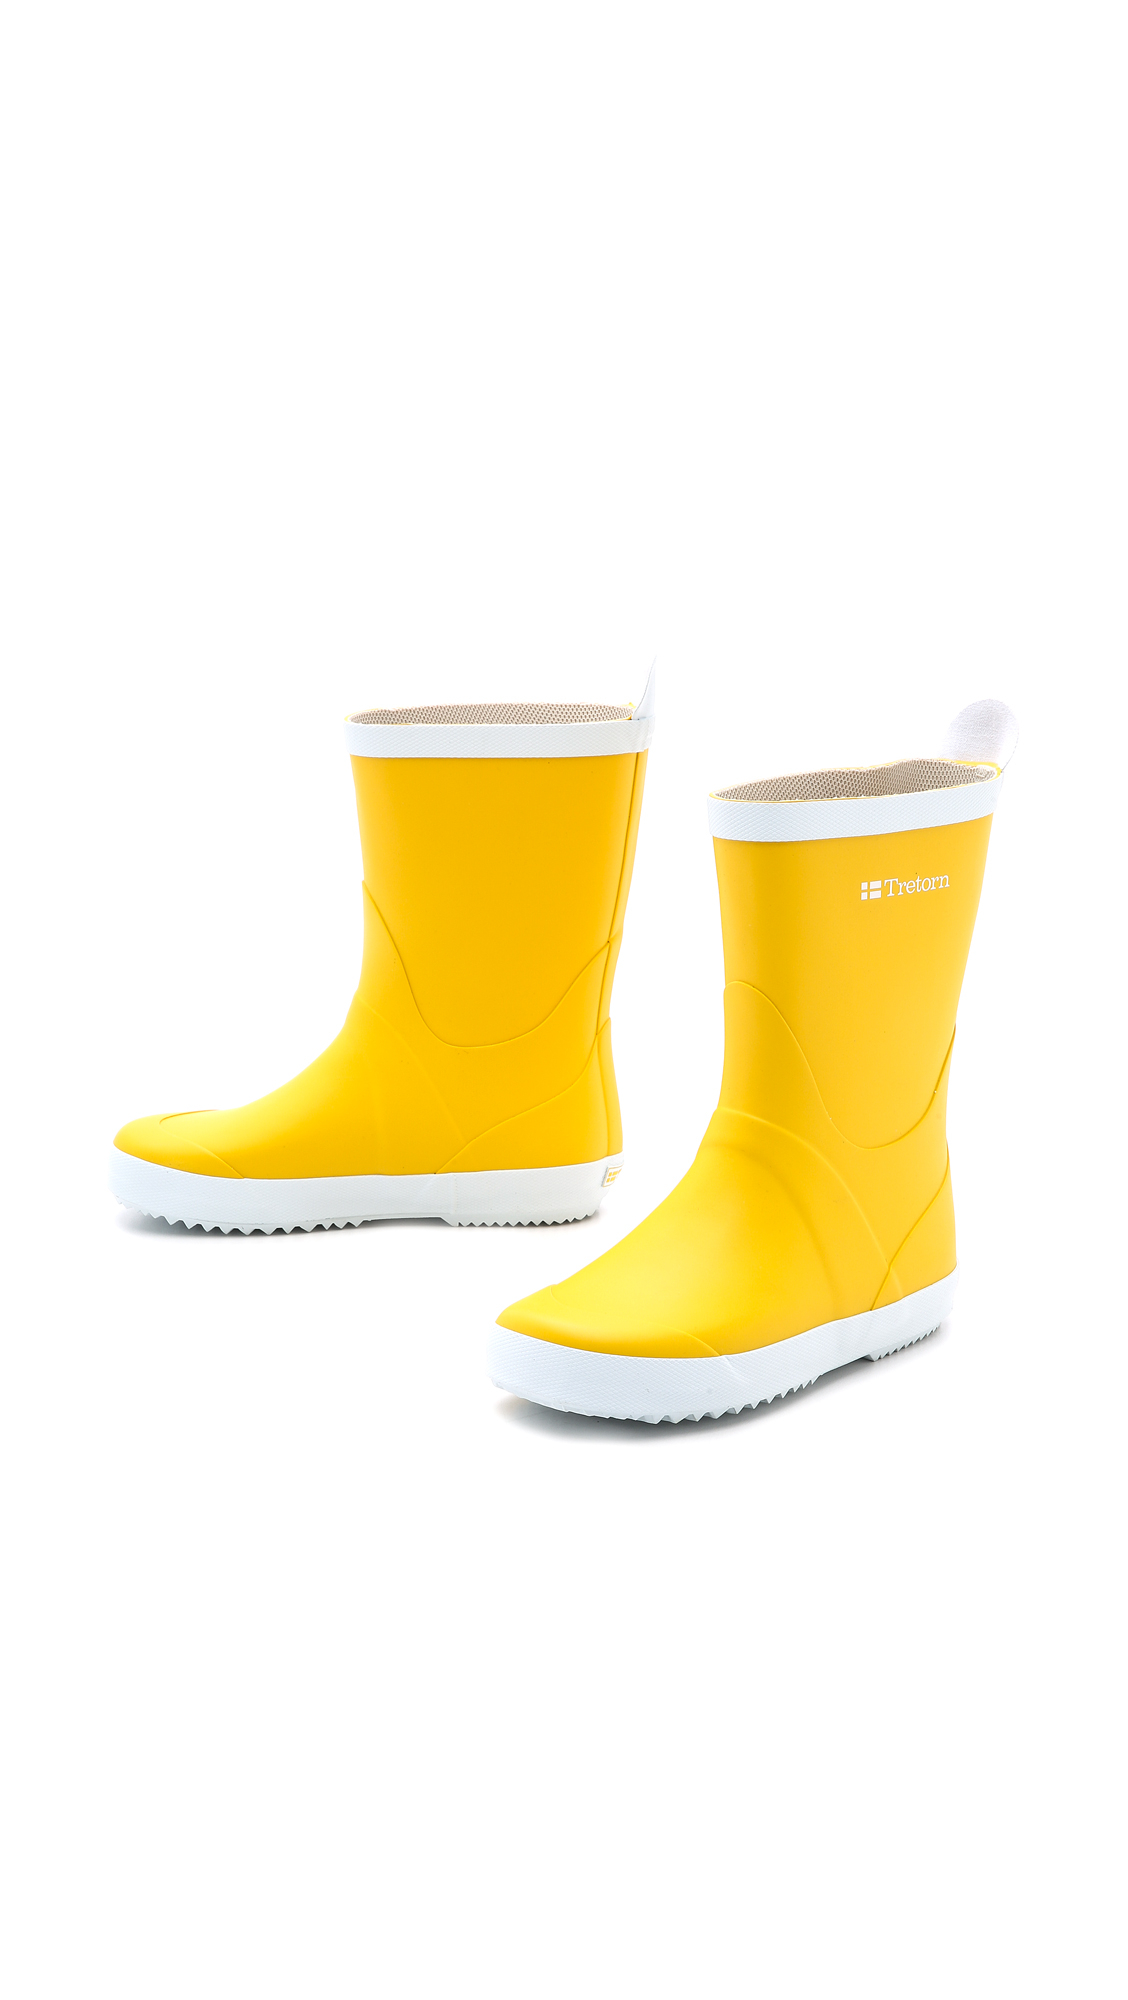 Tretorn Wings Rain Boots - Yellow | Lyst